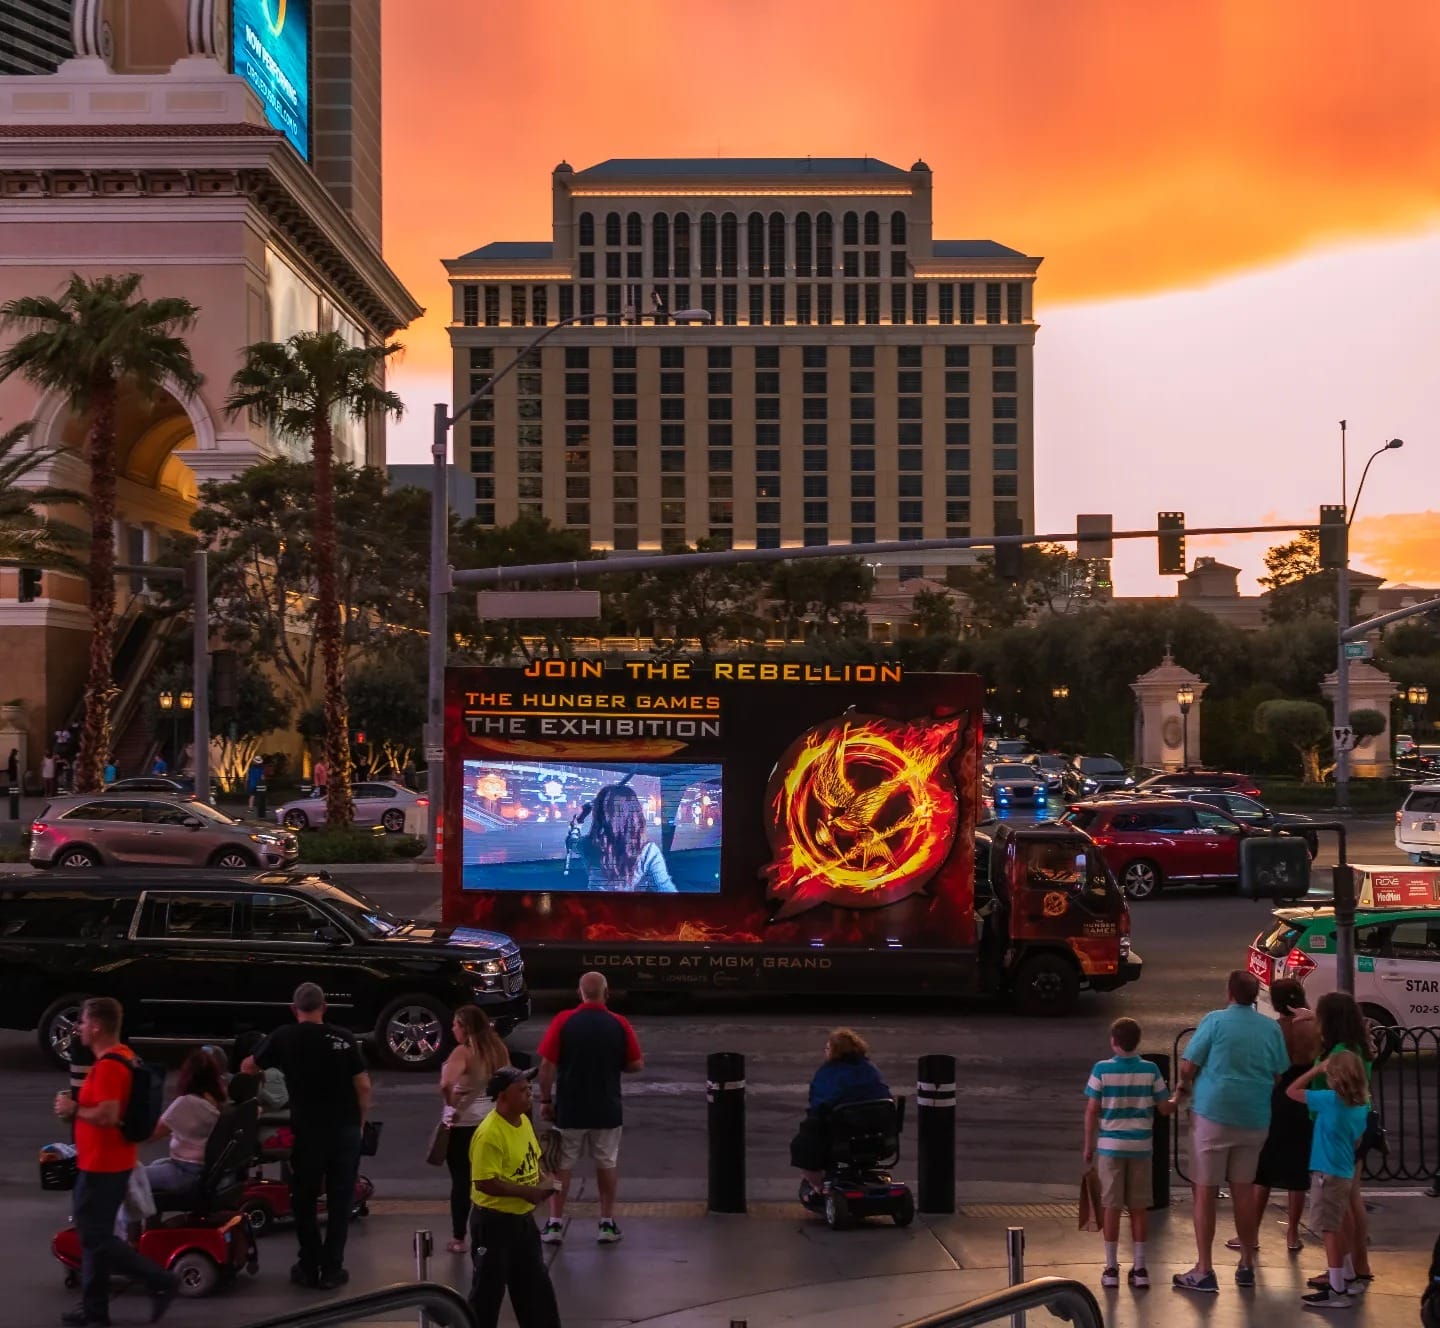 Sunset at Las Vegas Strip, Hunger Games exhibition billboard.